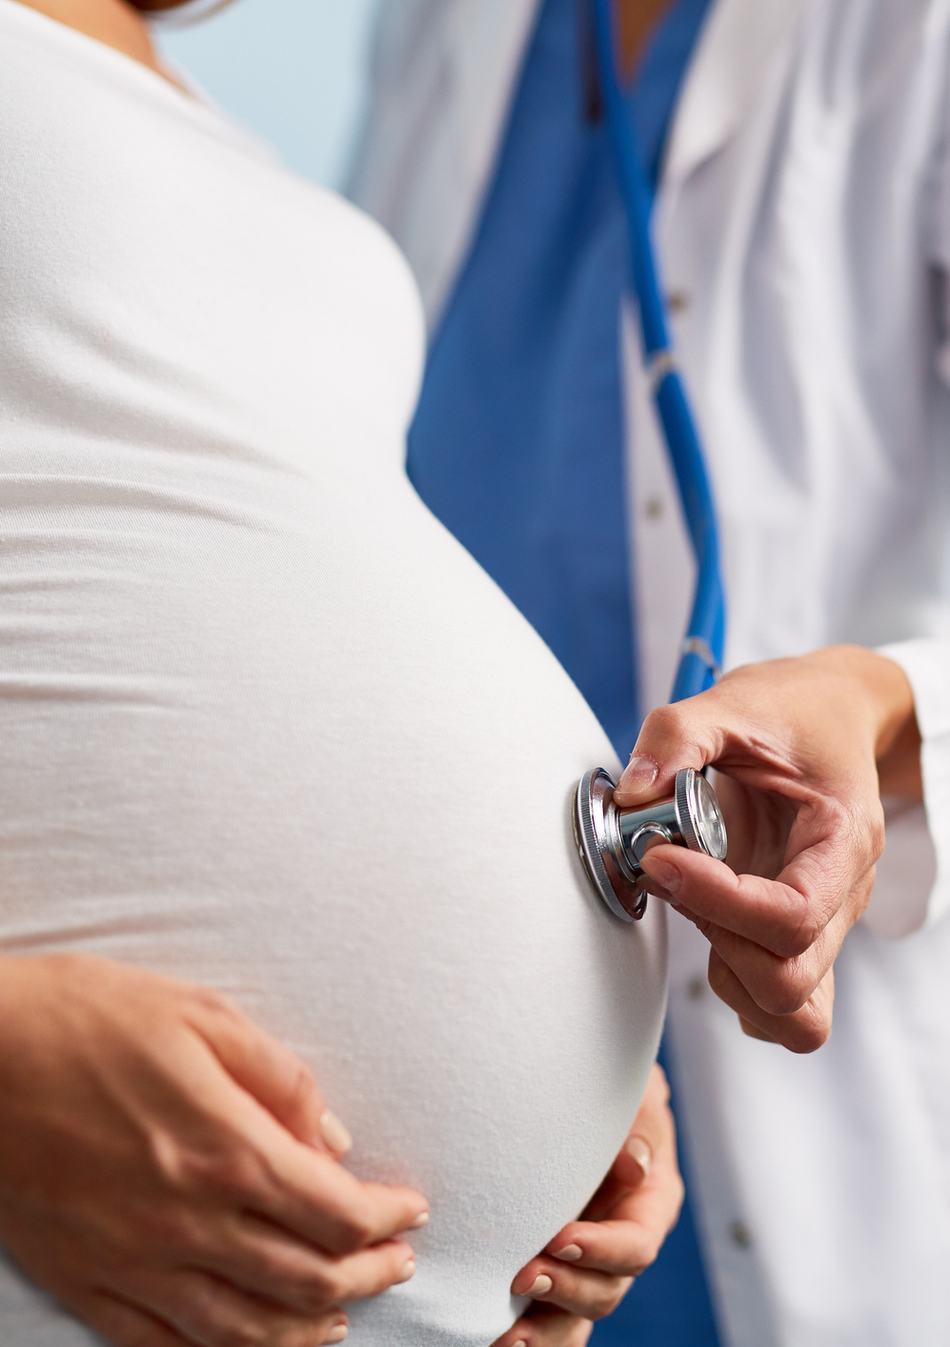 Utah Fetal Center: High-Risk Pregnancy Care in one Place